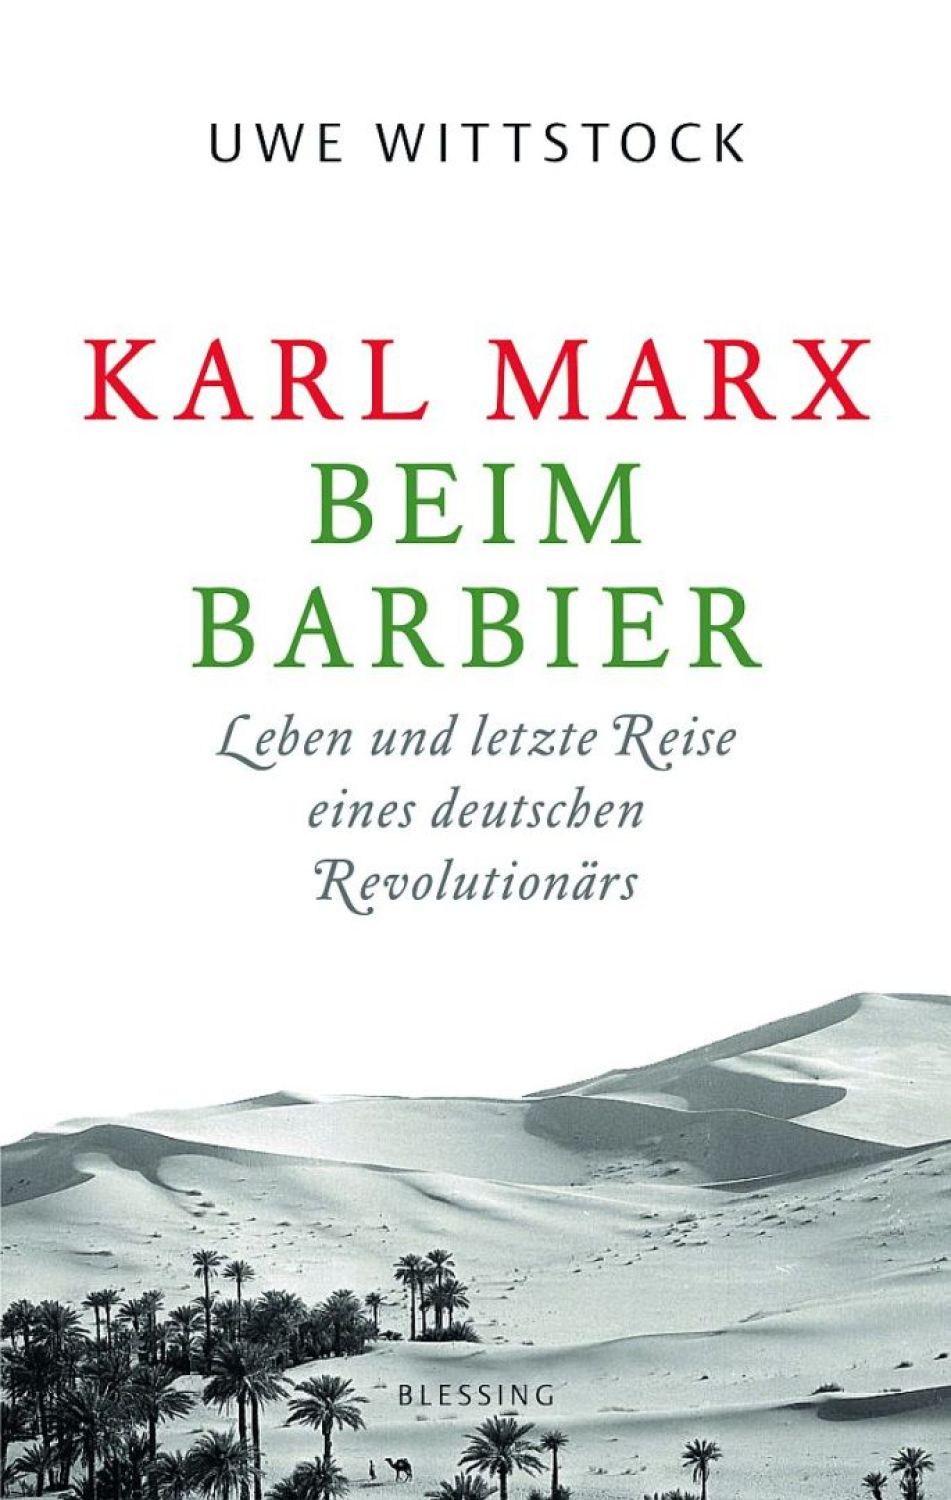 Wittstock - Karl Marx